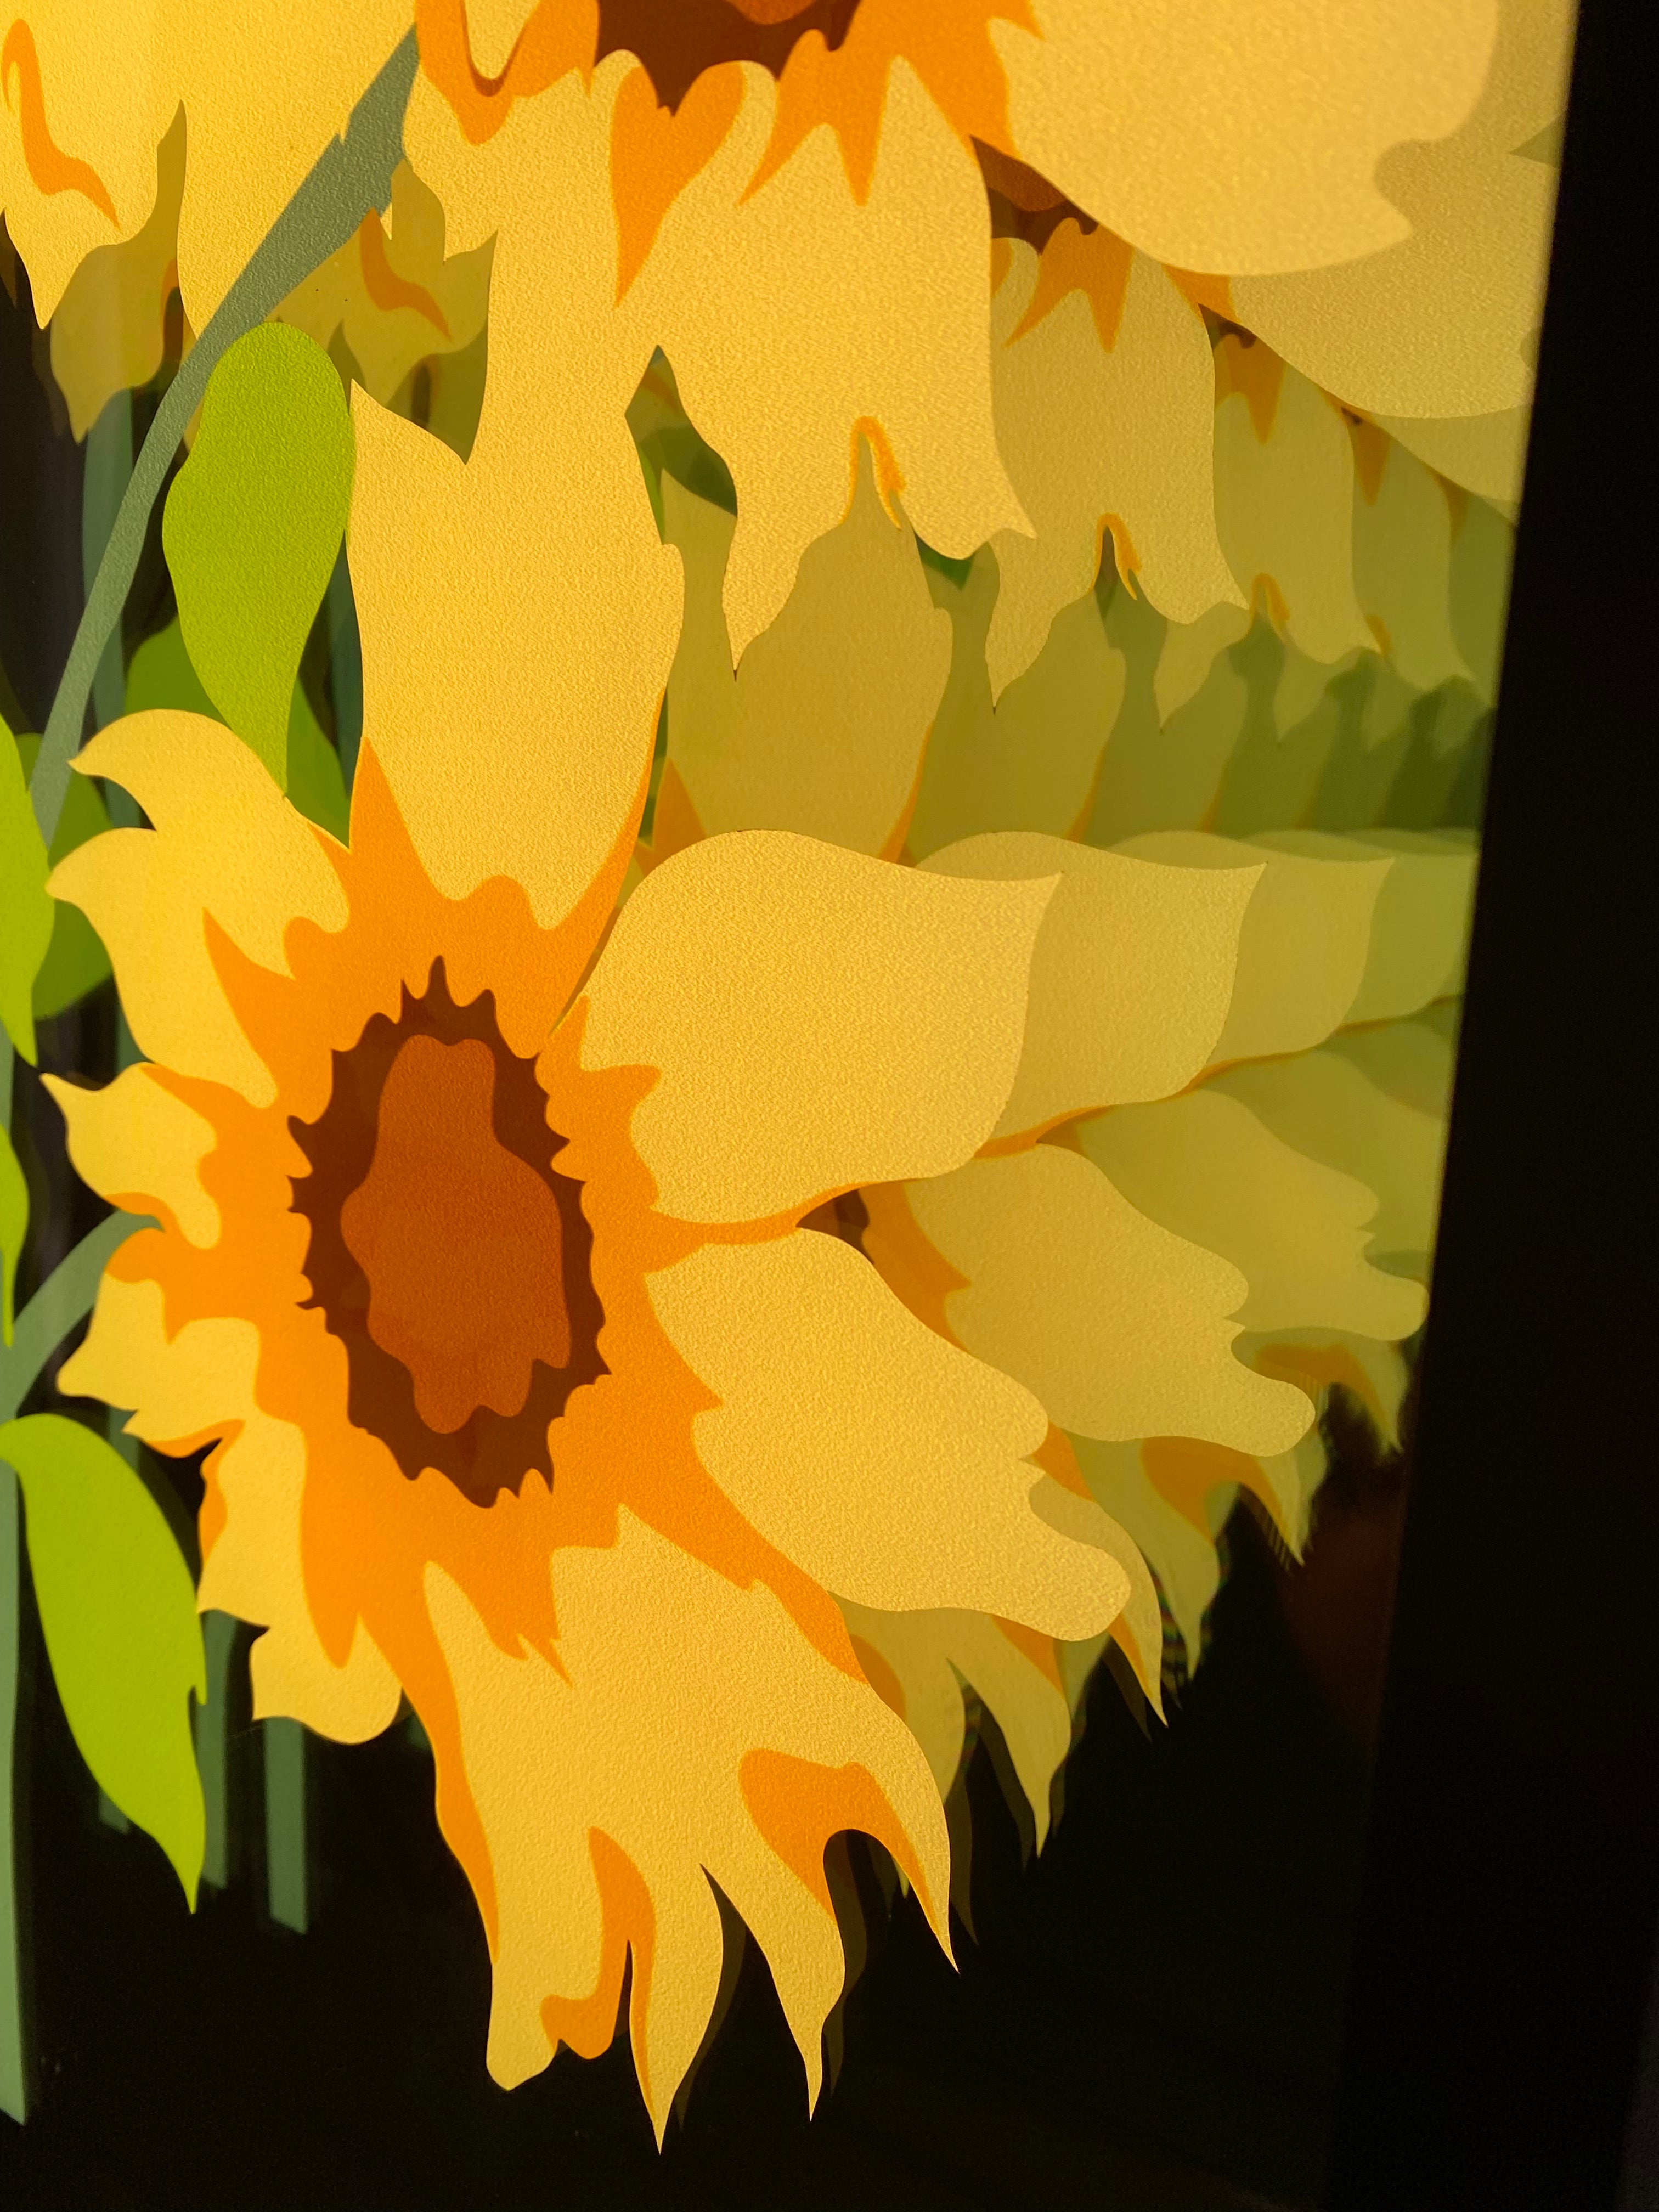 Sunflower led infinity mirror Best Gift for Birthday Wedding